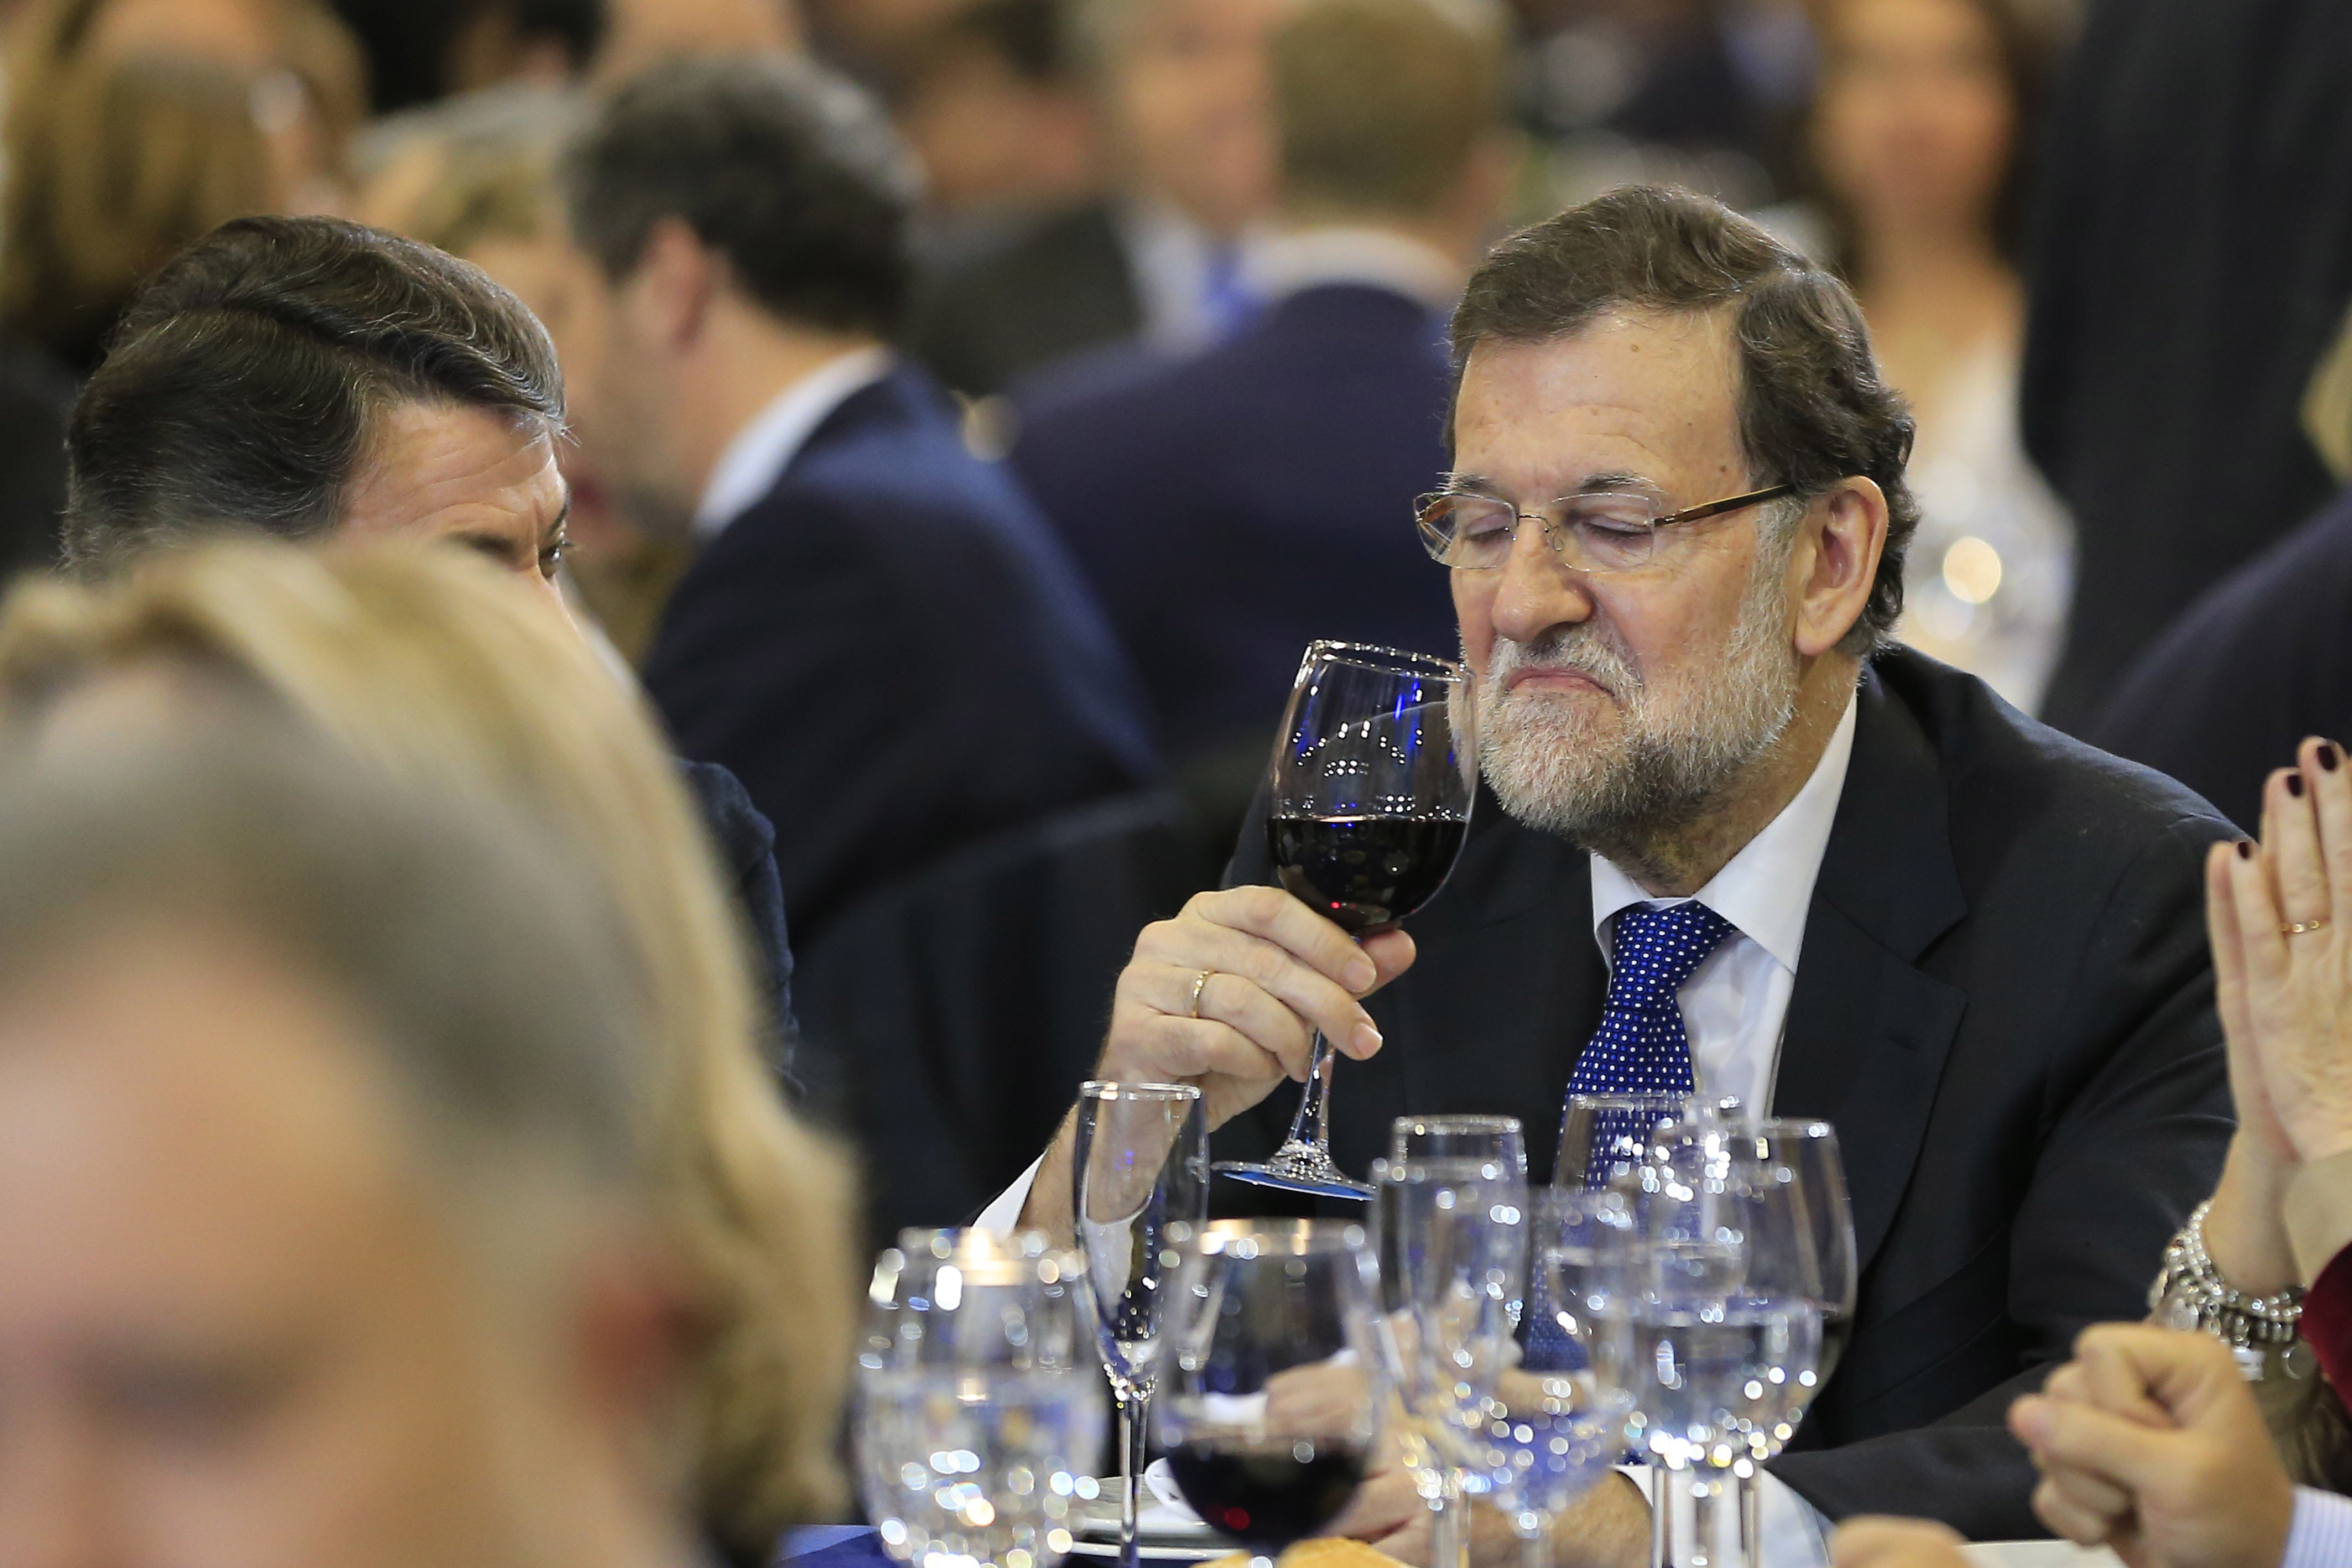 TVE humilla a Rajoy en un programa infantil: "discursos disparatados"